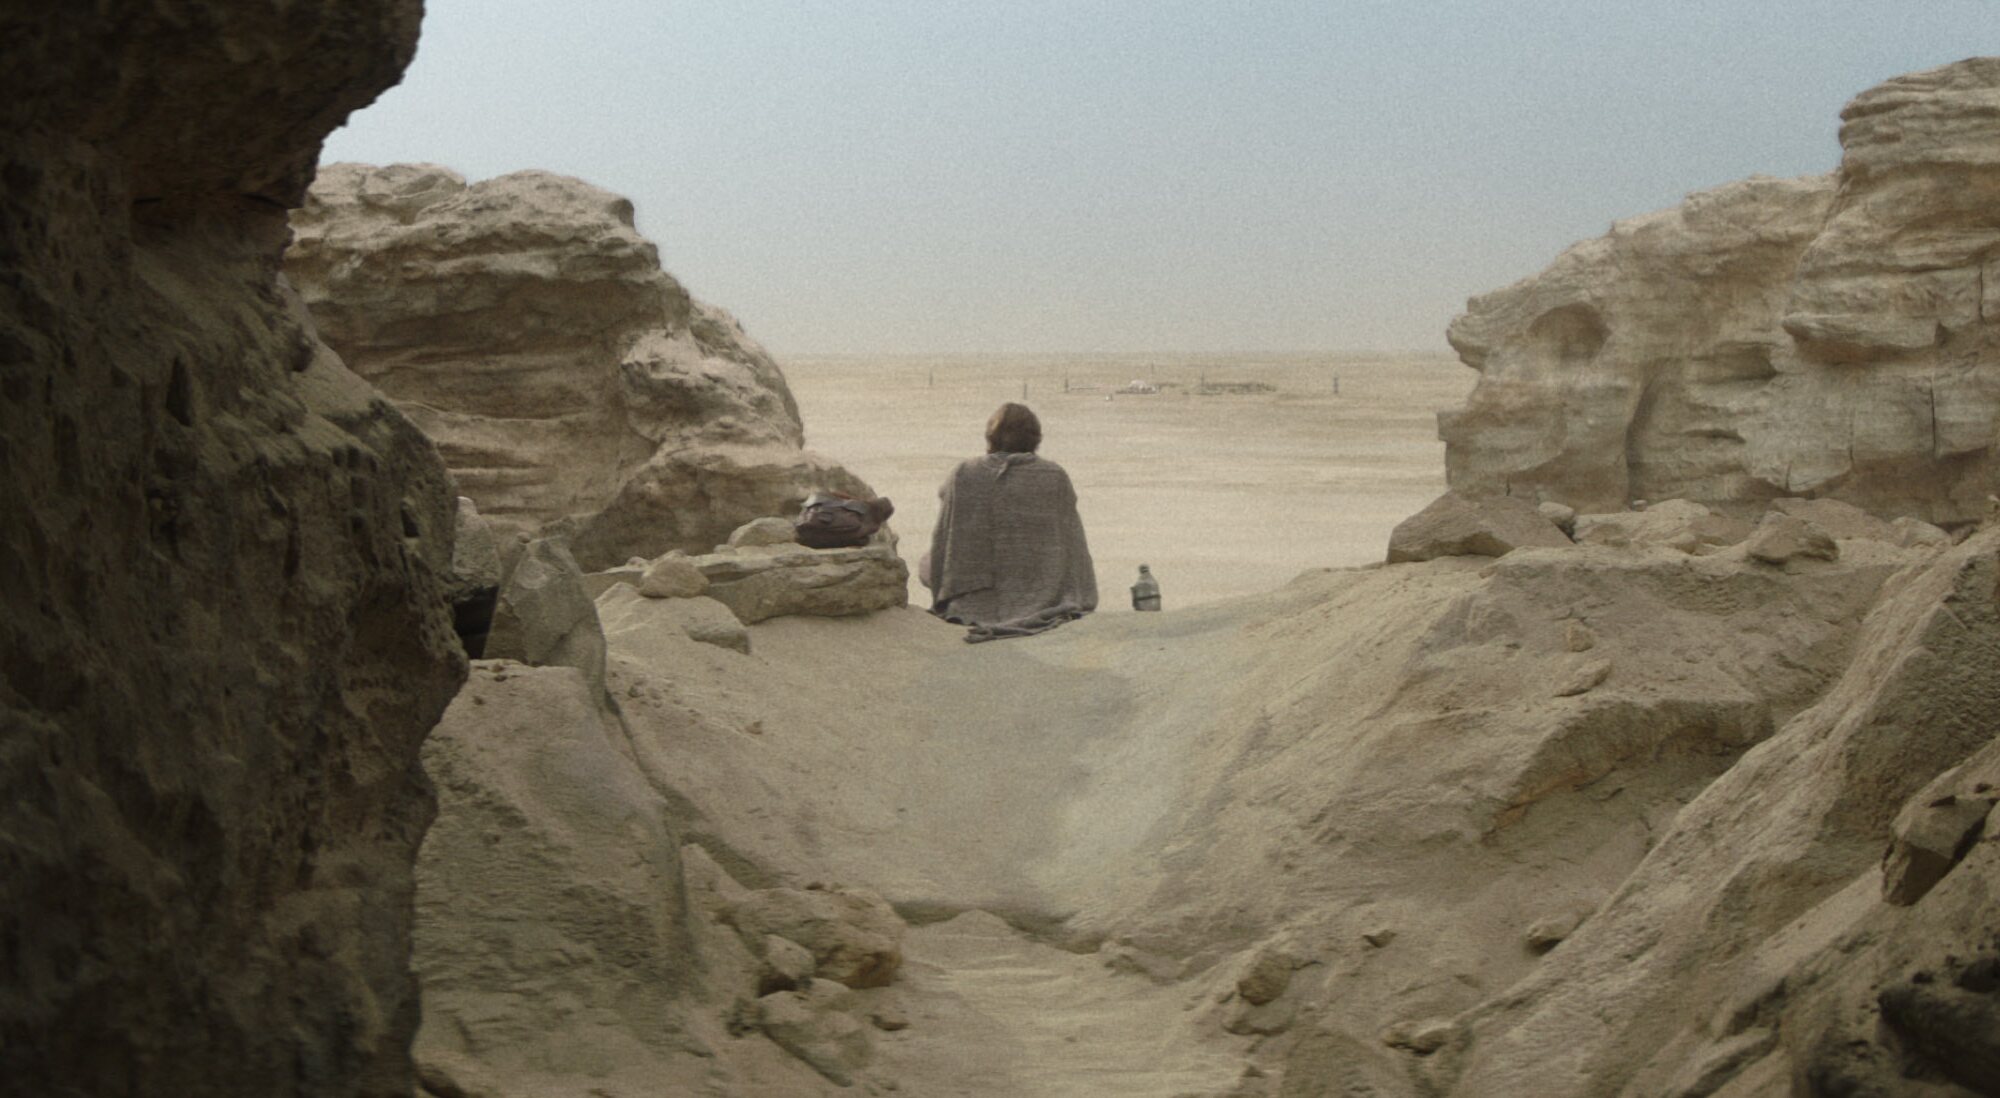 Kenobi contempla el árido paisaje de Tatooine